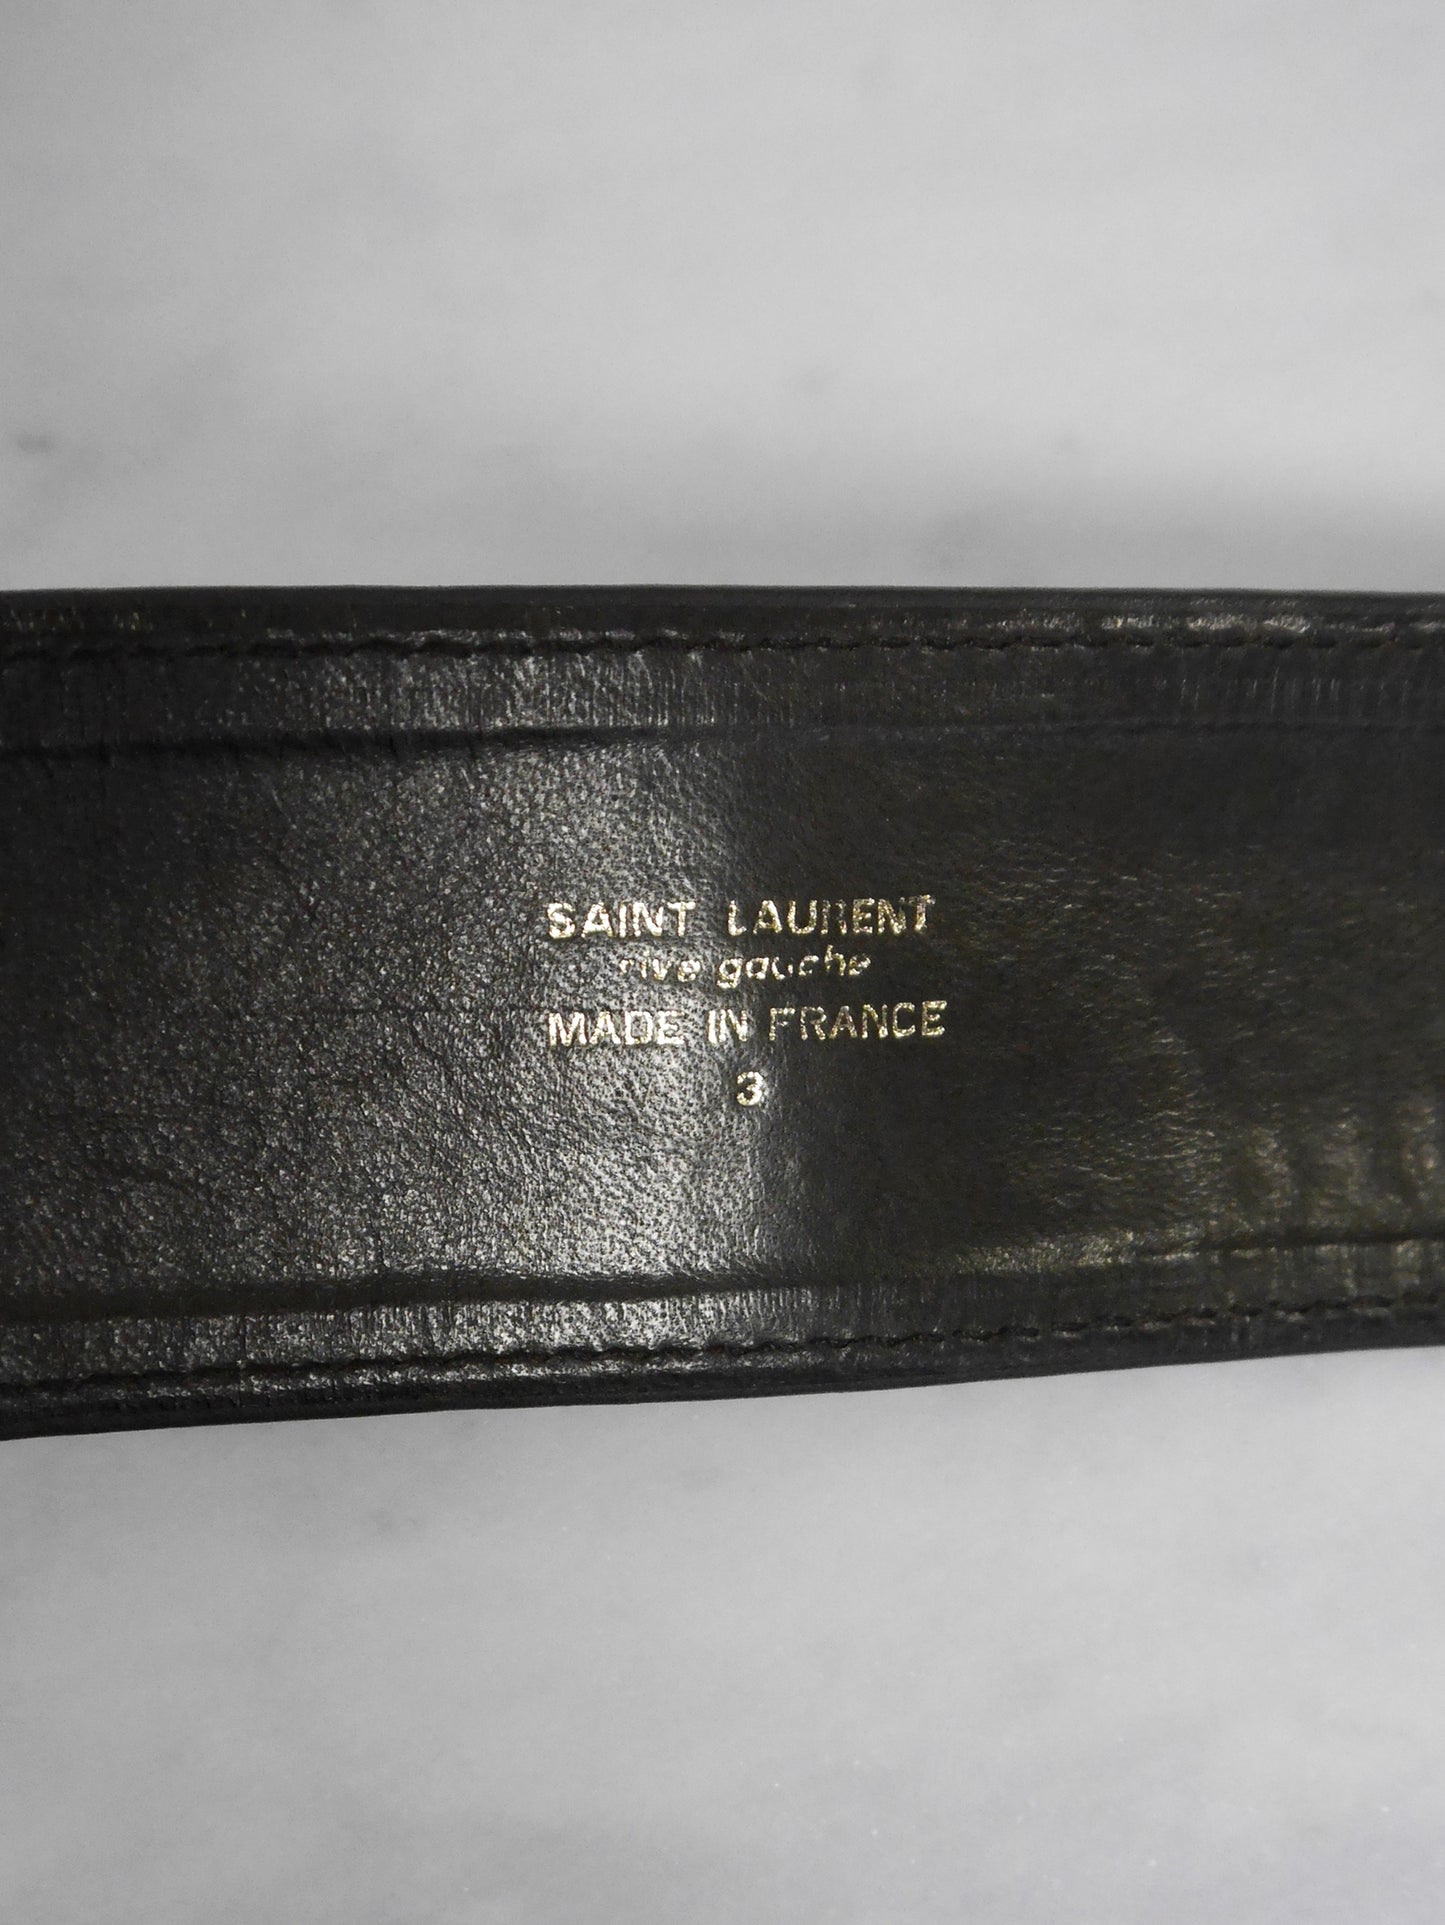 YVES SAINT LAURENT Spring 1977 Spanish Collection Vintage Belt Size S